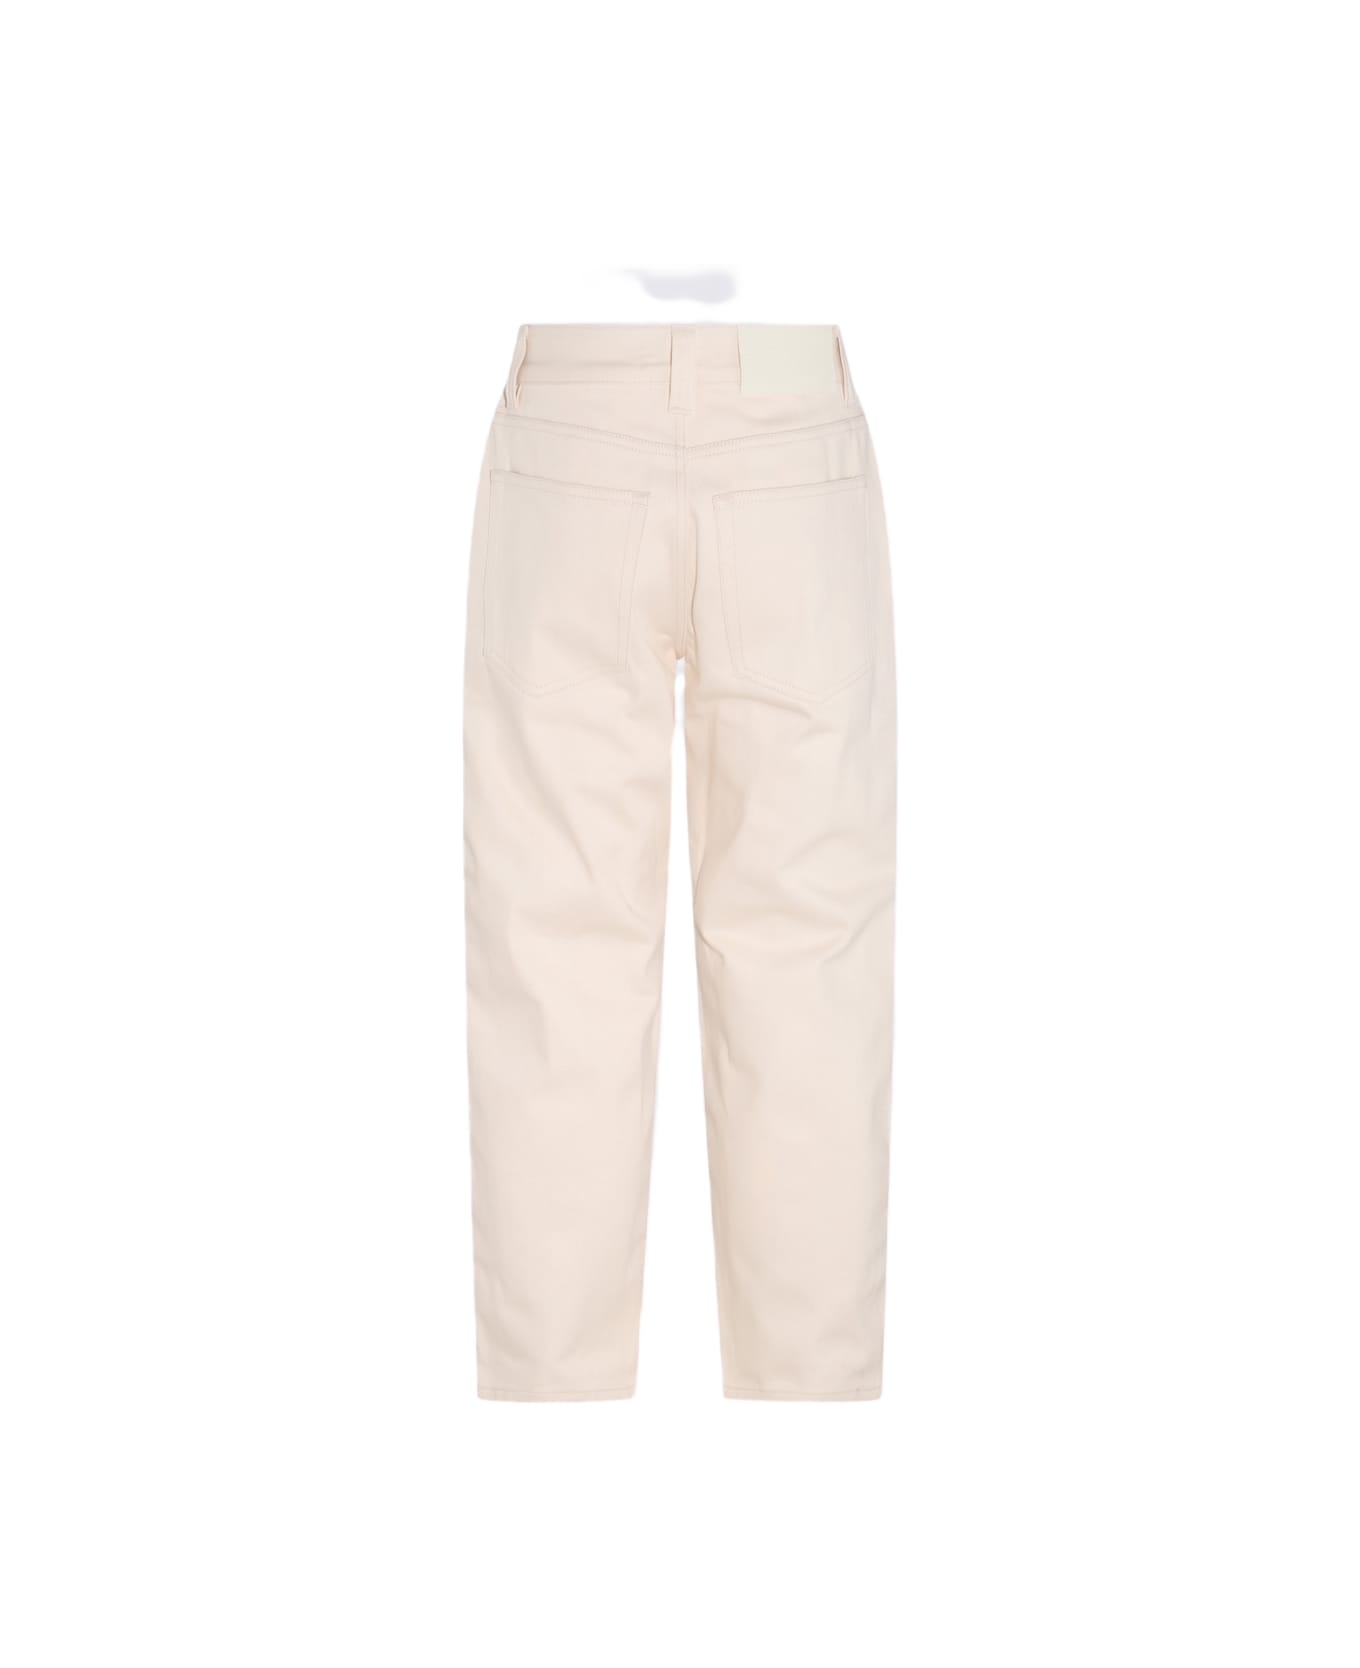 Sunnei Ecru White Stripes Cotton Pants - ECRU WHITE STRIPES ボトムス